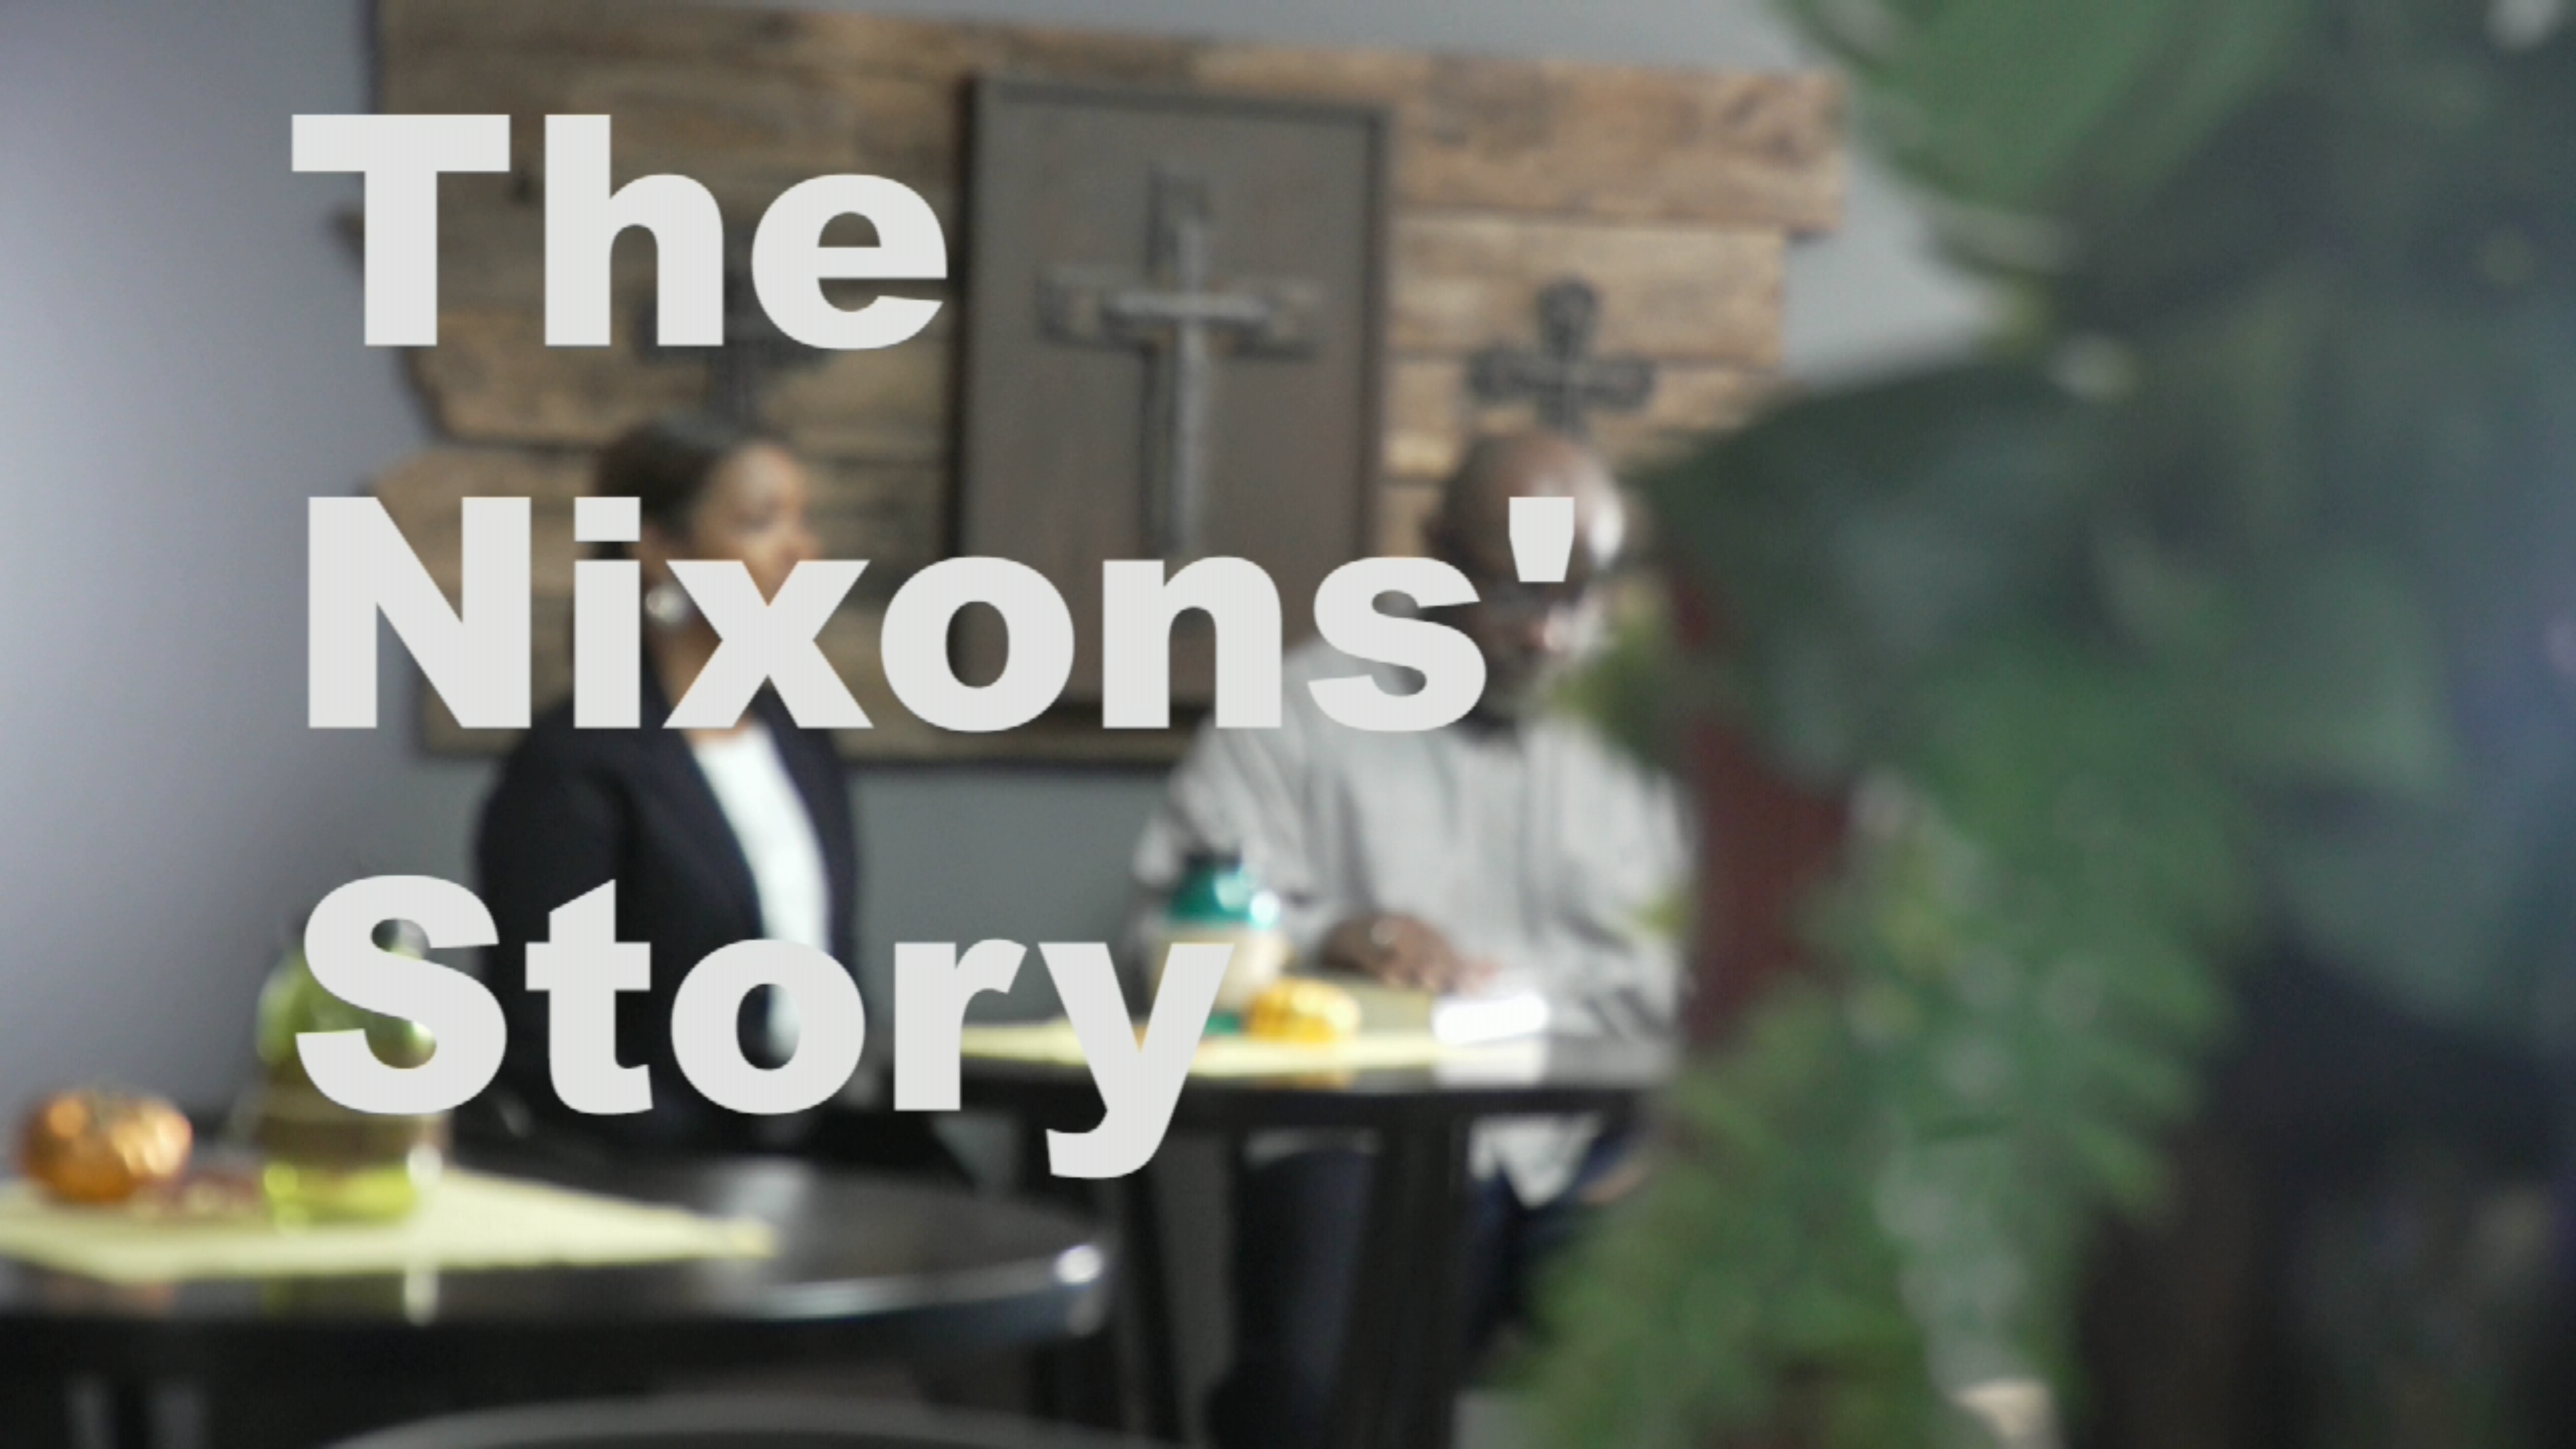 The Nixon's Story